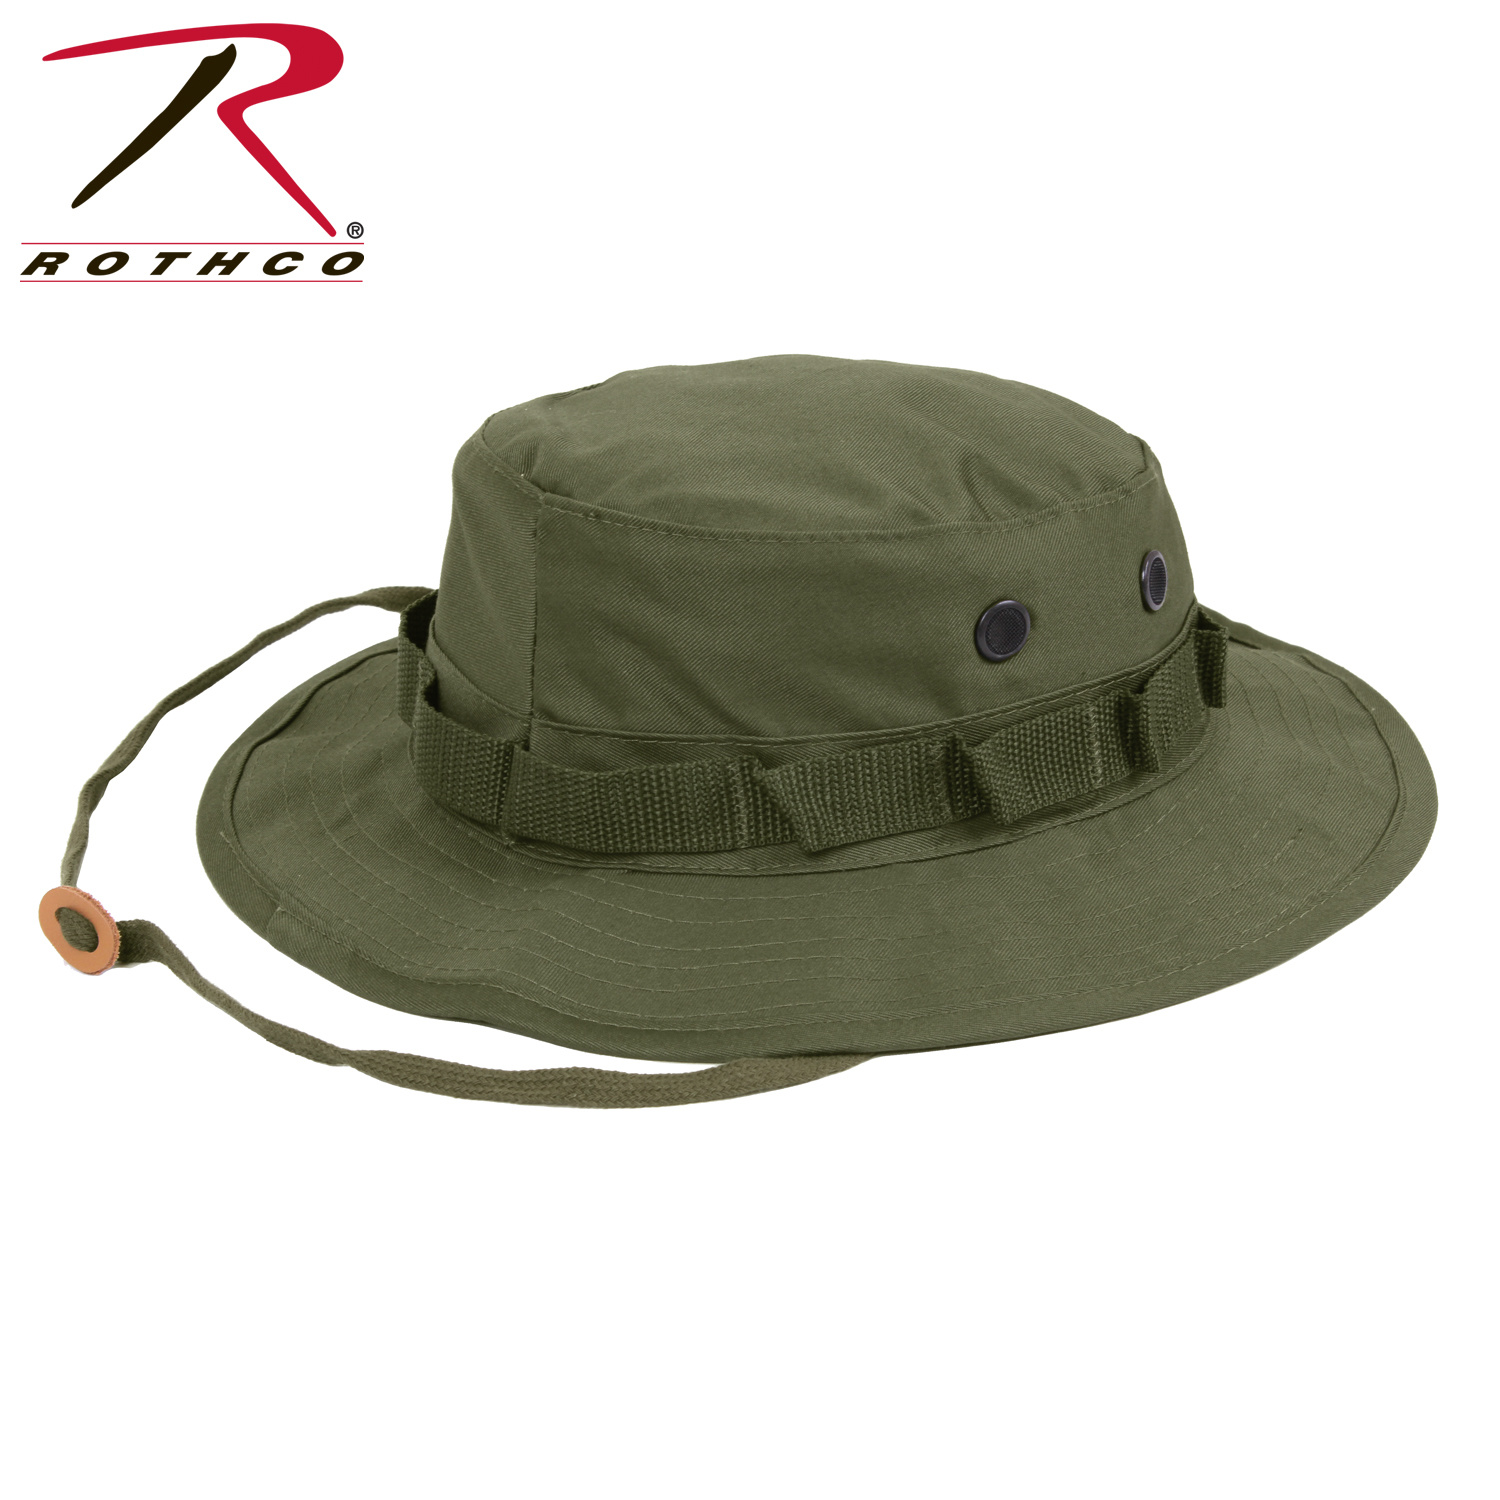 Шляпа войны. Rothco Панама Olive. Панама 5.11 Boonie hat. Rothco Boonie hat. Rothco - Tactical Boonie hat.